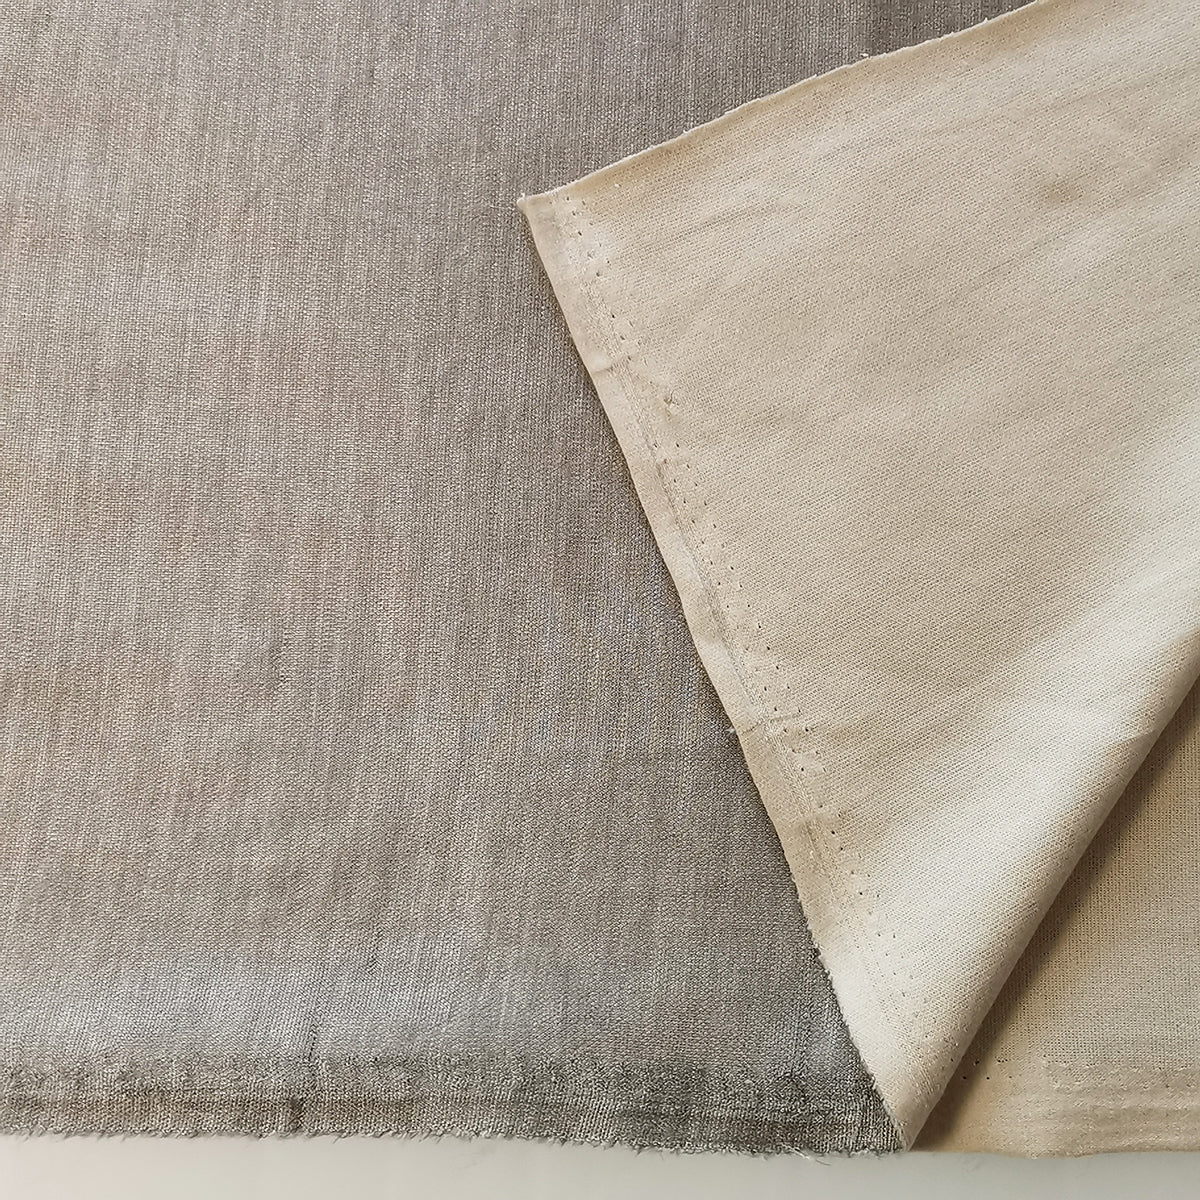 Faraday Silver Fiber Cotton Fabric Reducing Radiation EMF Stretch for Clothing